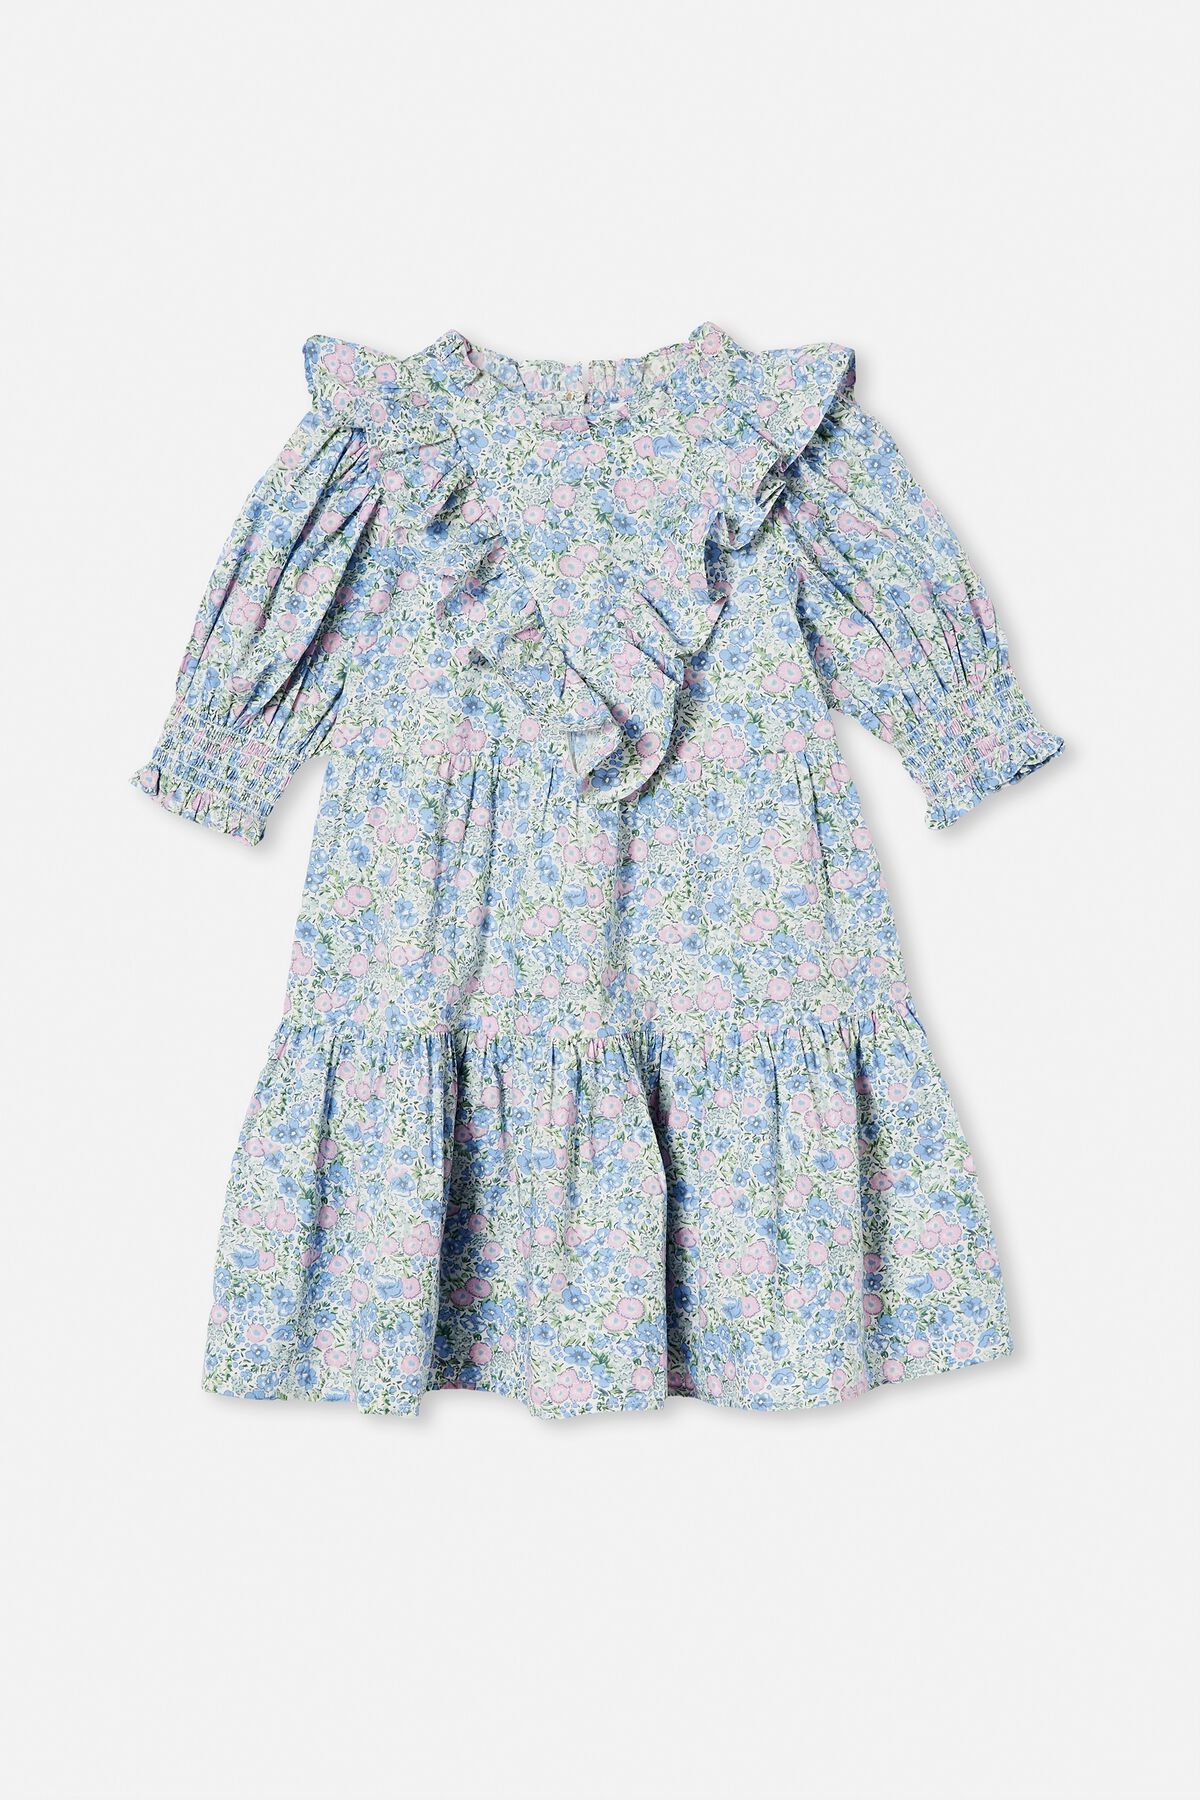 Magnolia Short Sleeve Dress | Cotton On (ANZ)